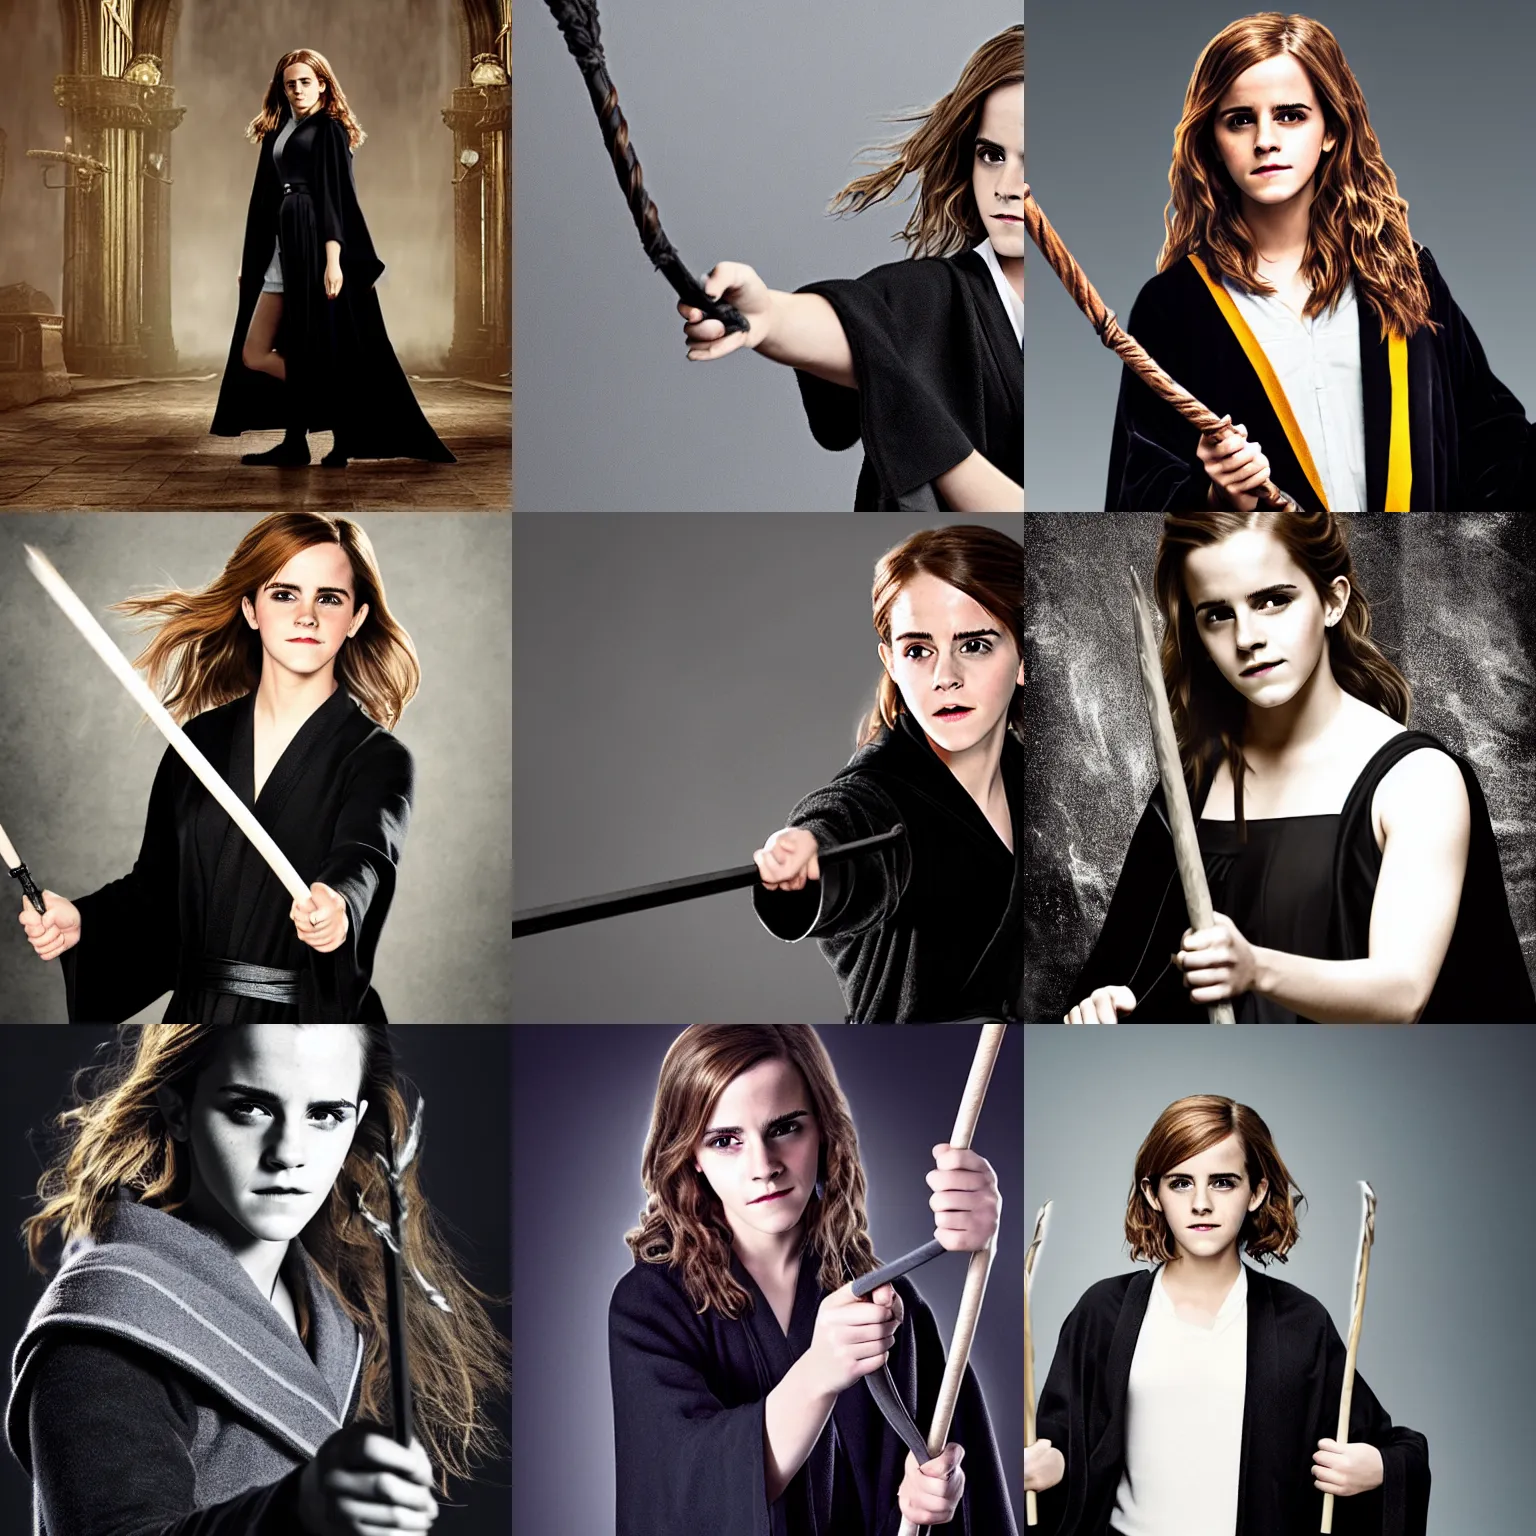 Prompt: Emma Watson as Hermione Granger, wearing black robe, promotional photo, studio lighting, blank background, action pose, holding elder wand